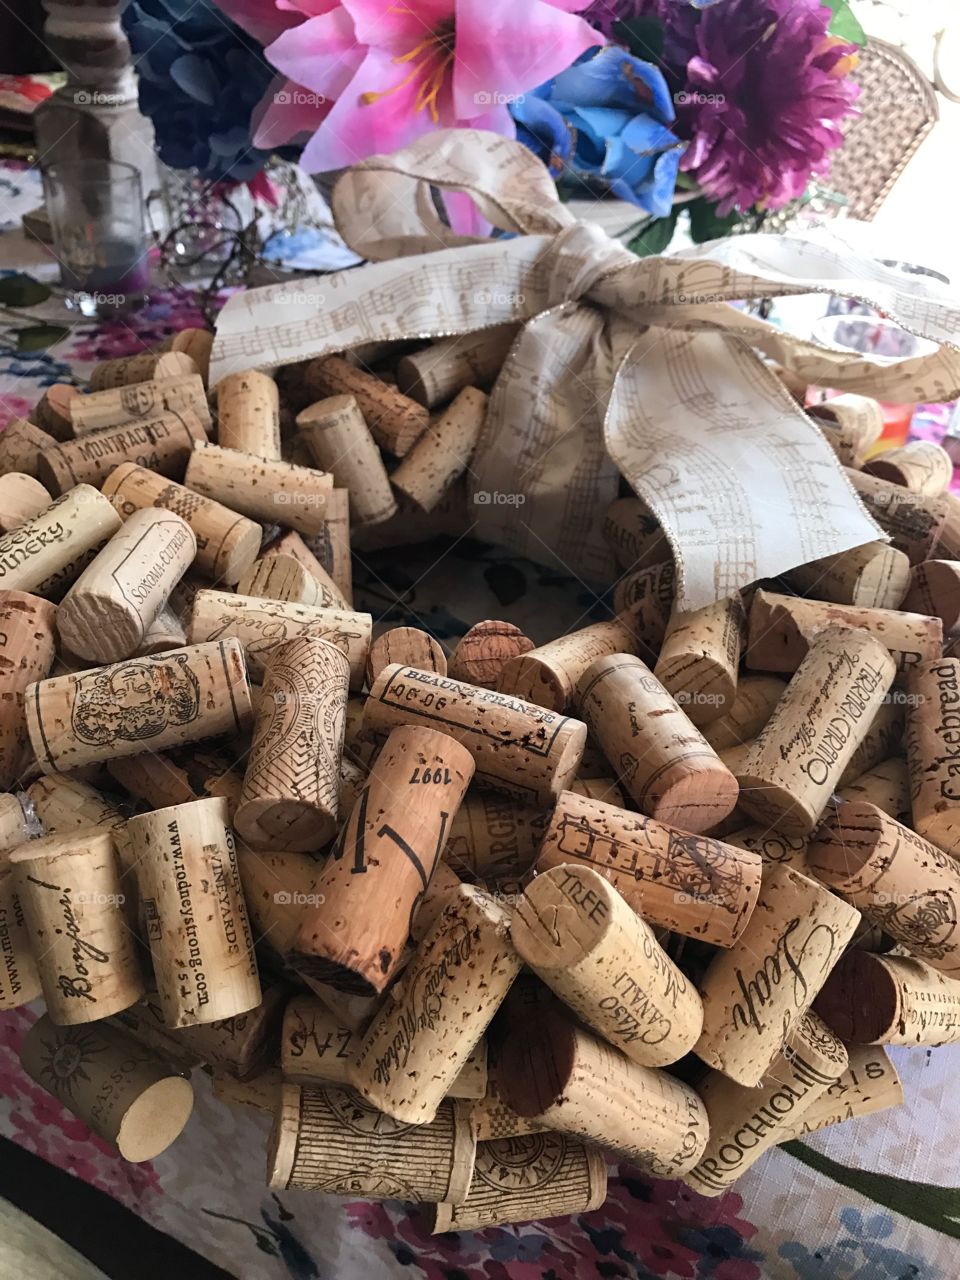 Cheers to wine cork wreaths 🍷